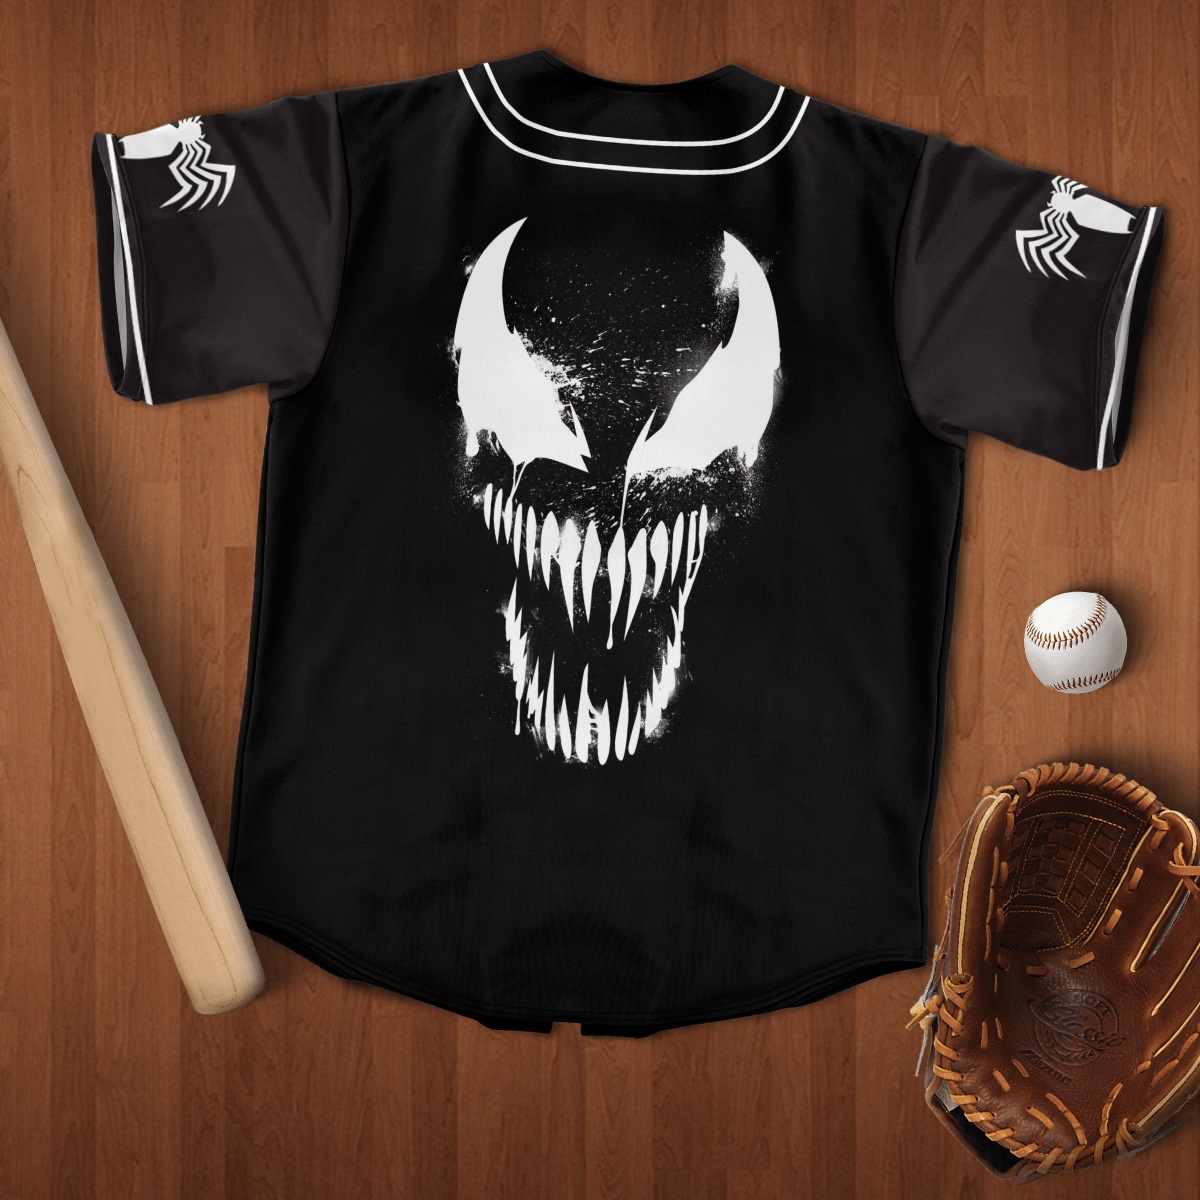 Venom baseball jersey shirt - Picture 1